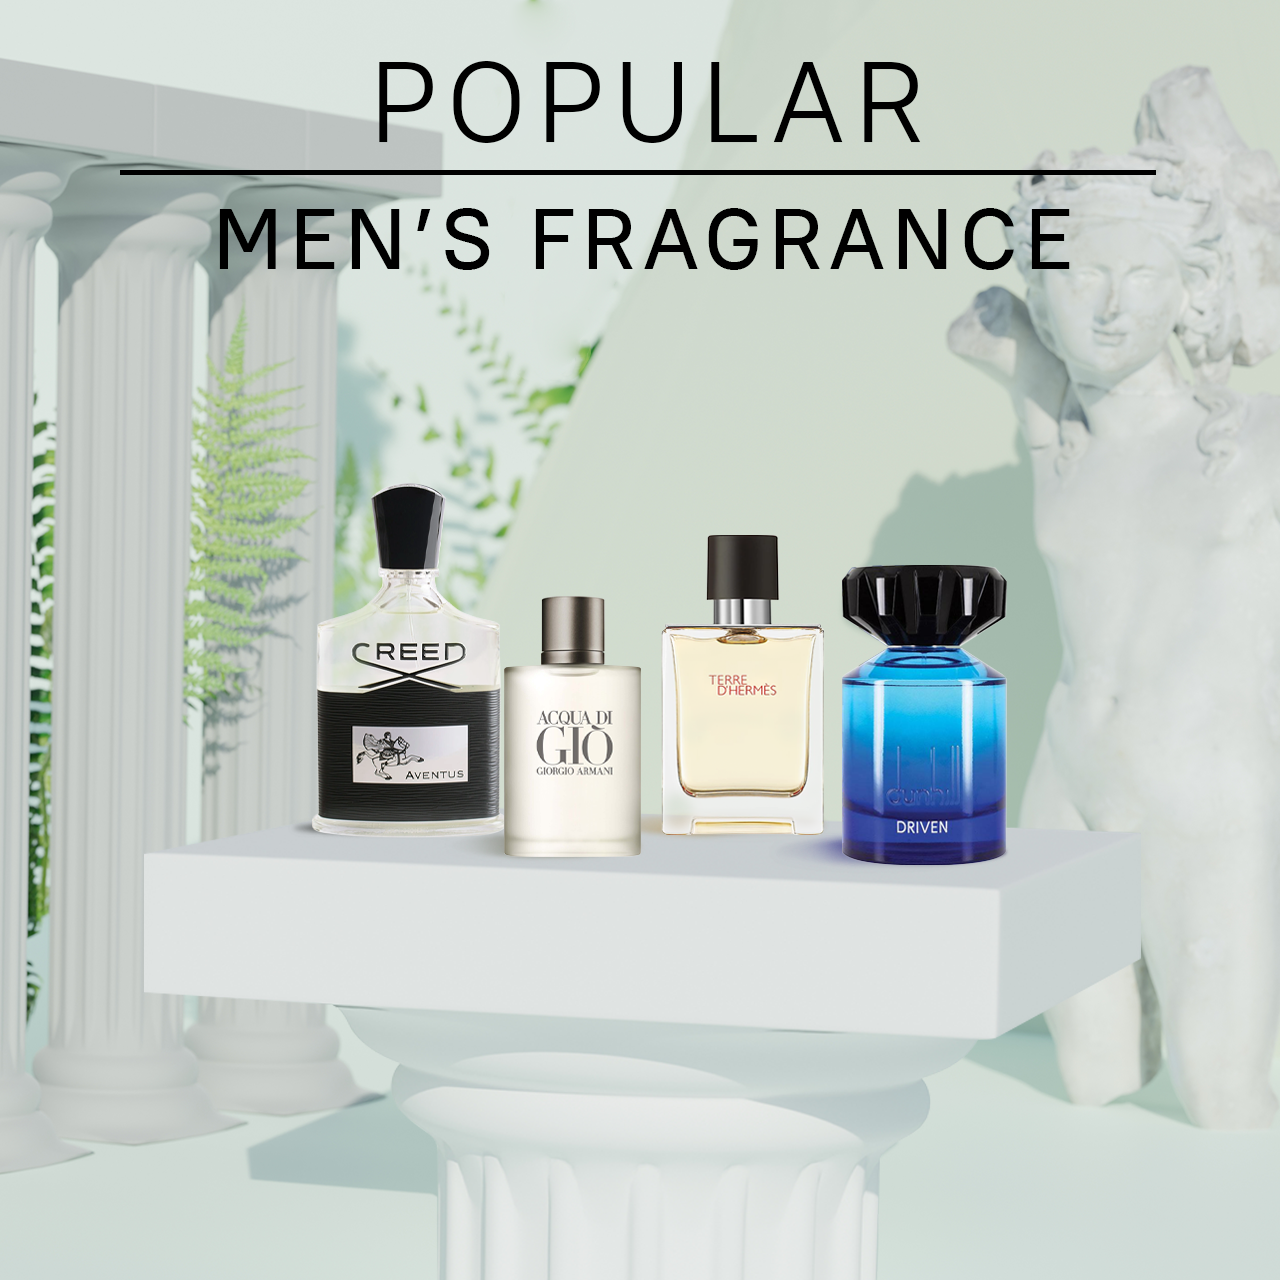 Popular Men's Fragrances